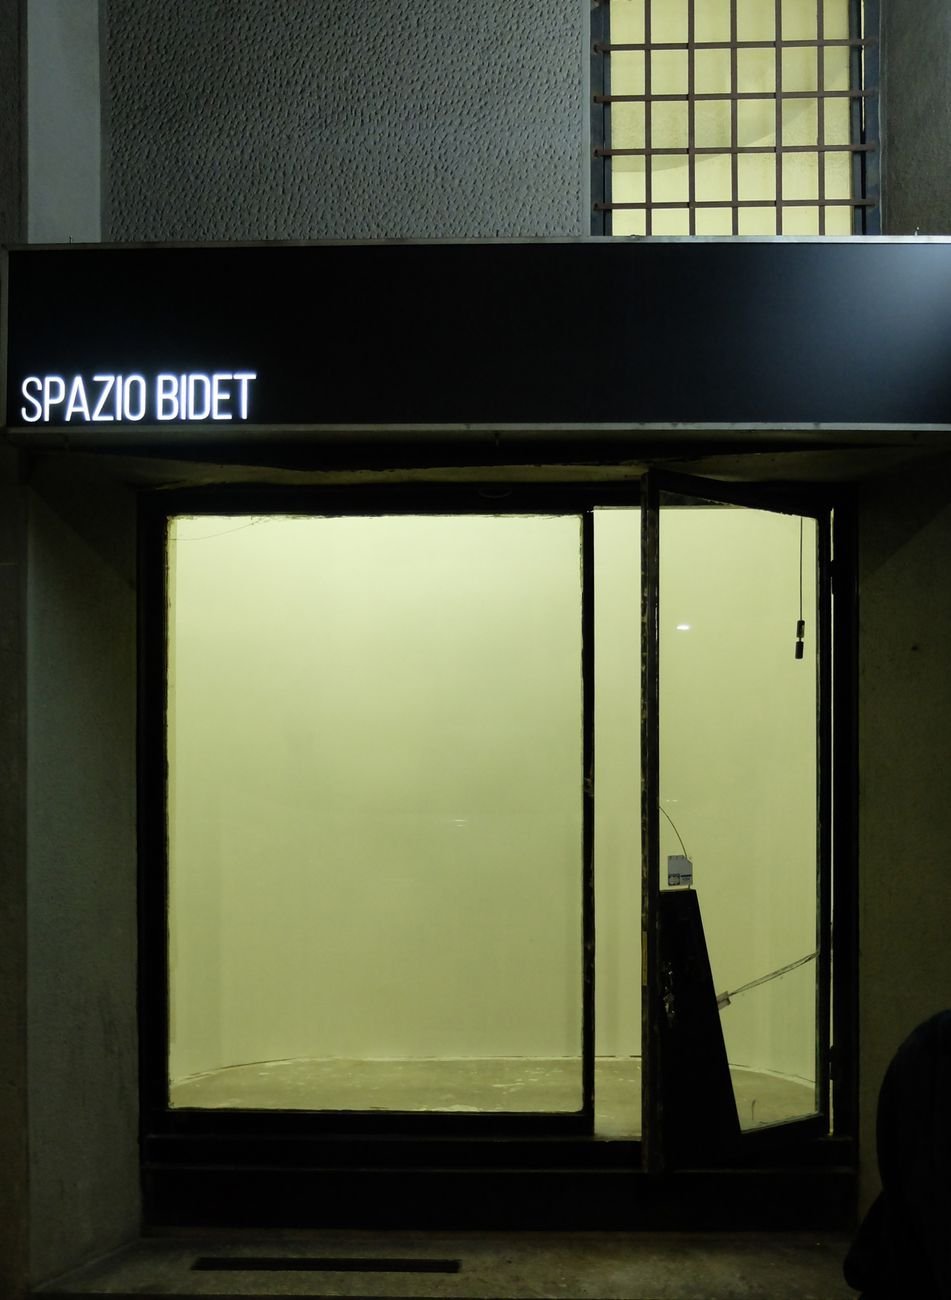 Spazio Bidet - Enoteca la Botte, Milano. Photo F. Stipari